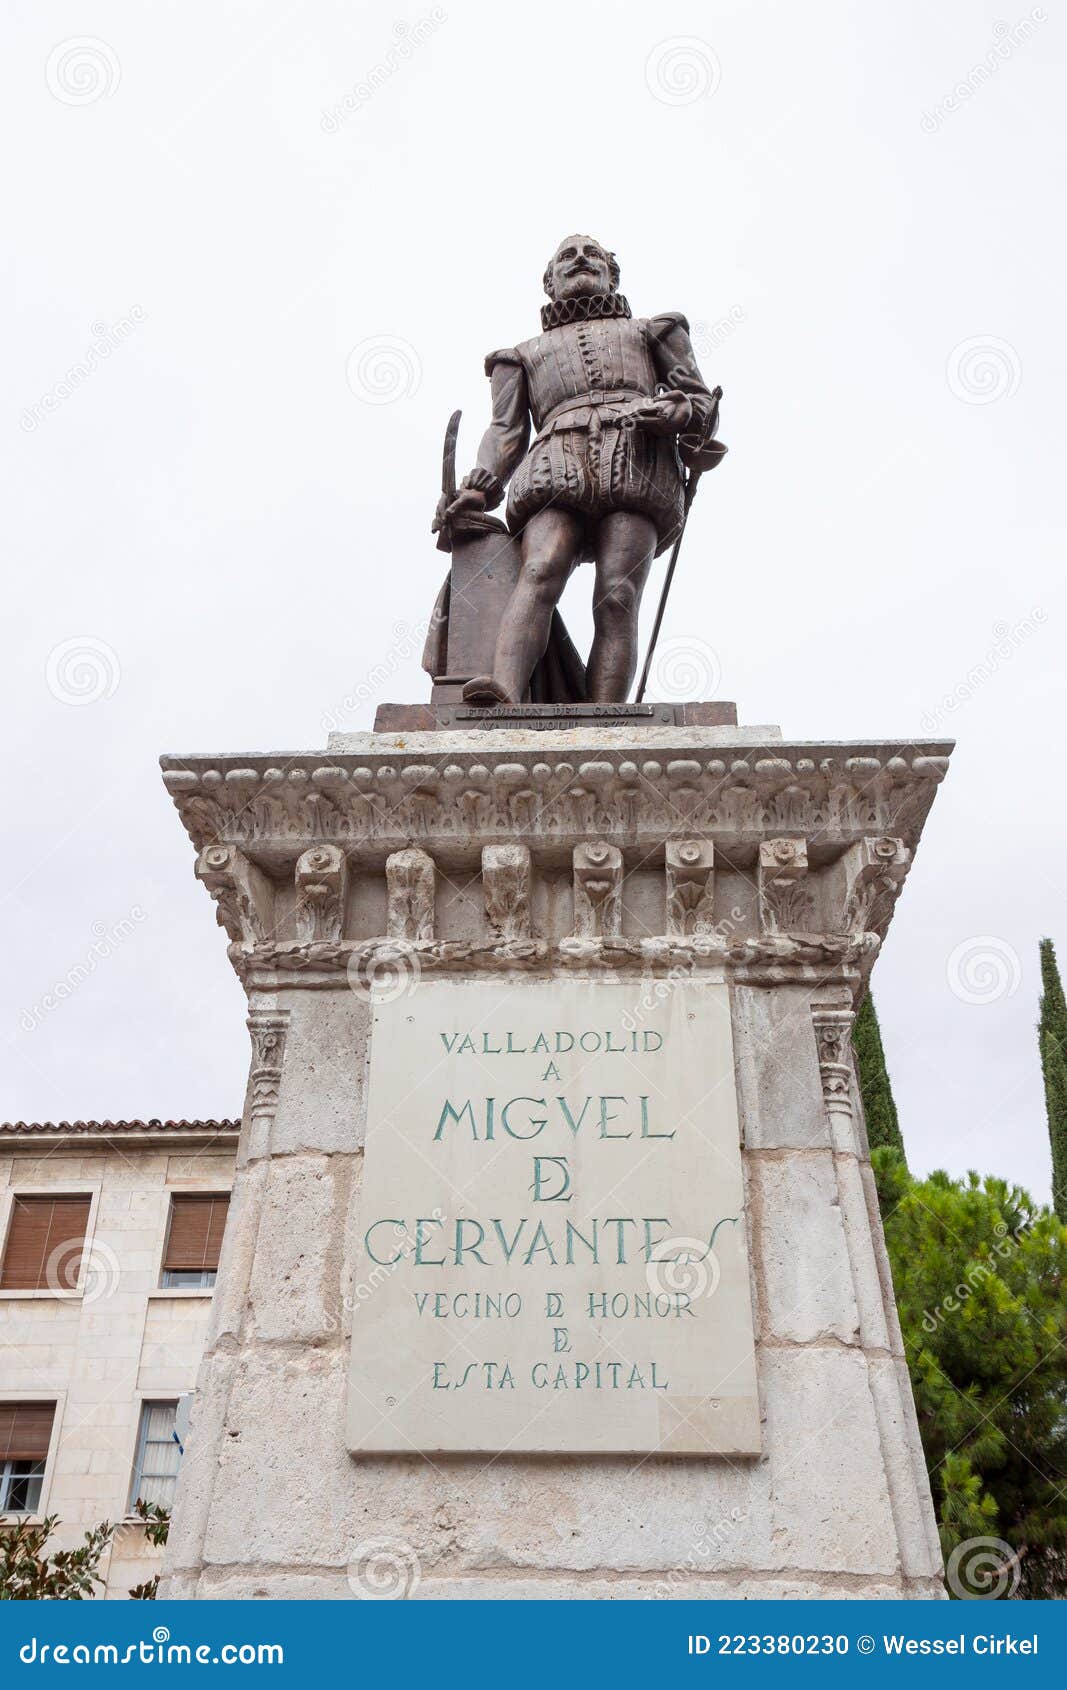 statue of cervantes in valladolid, spain